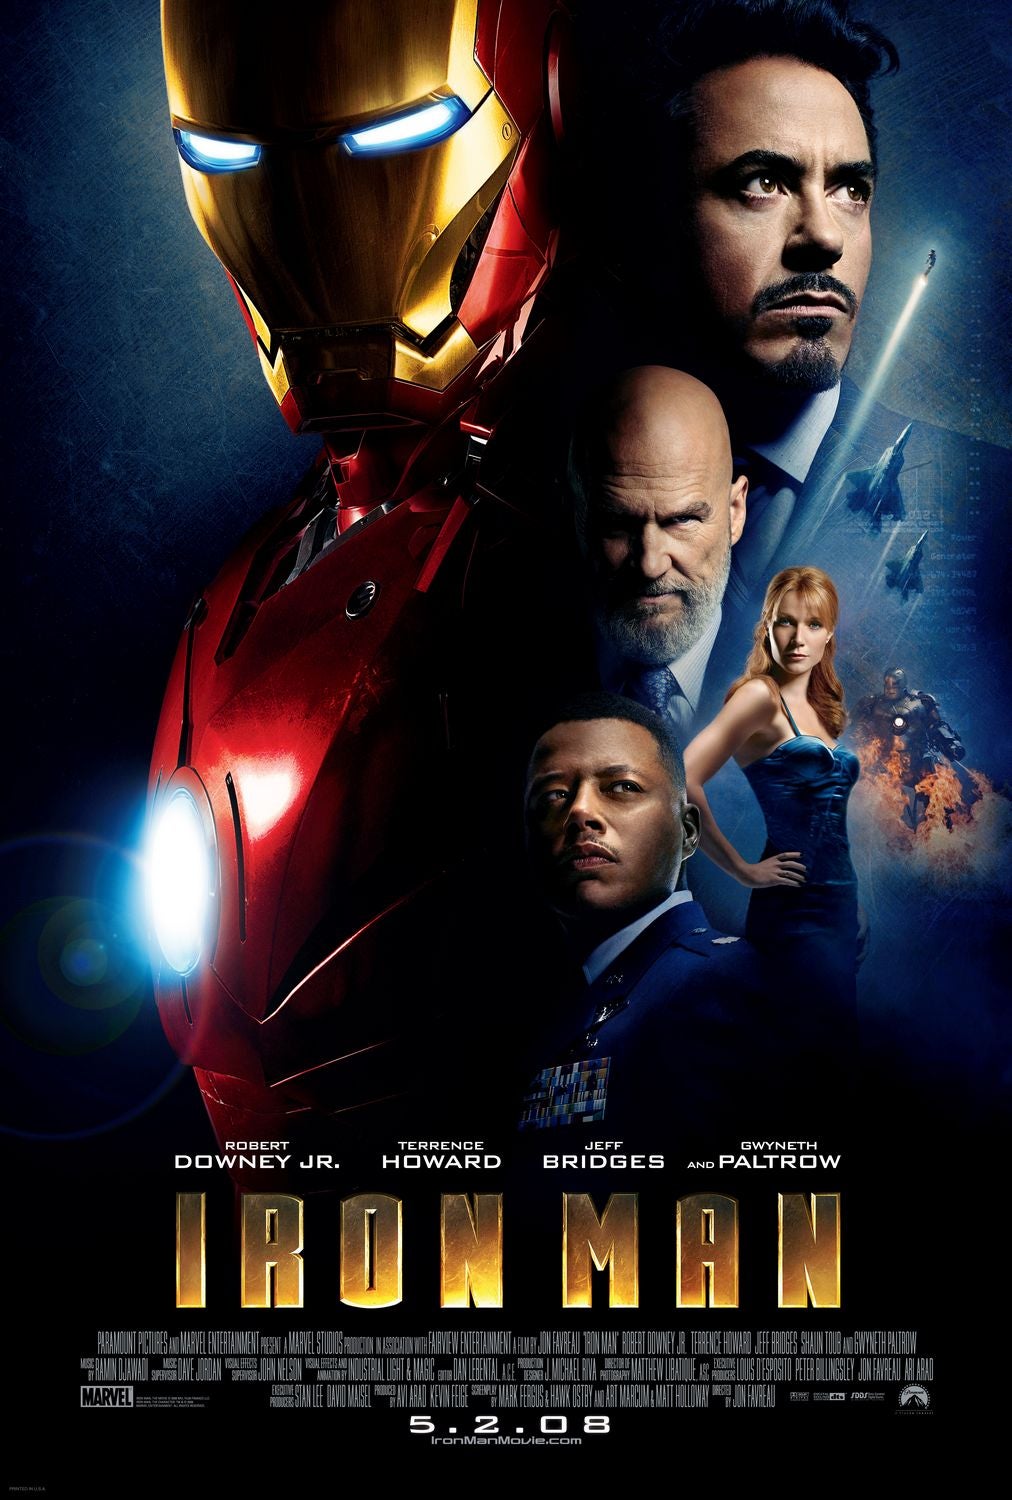 Iron man movie poster- 2008